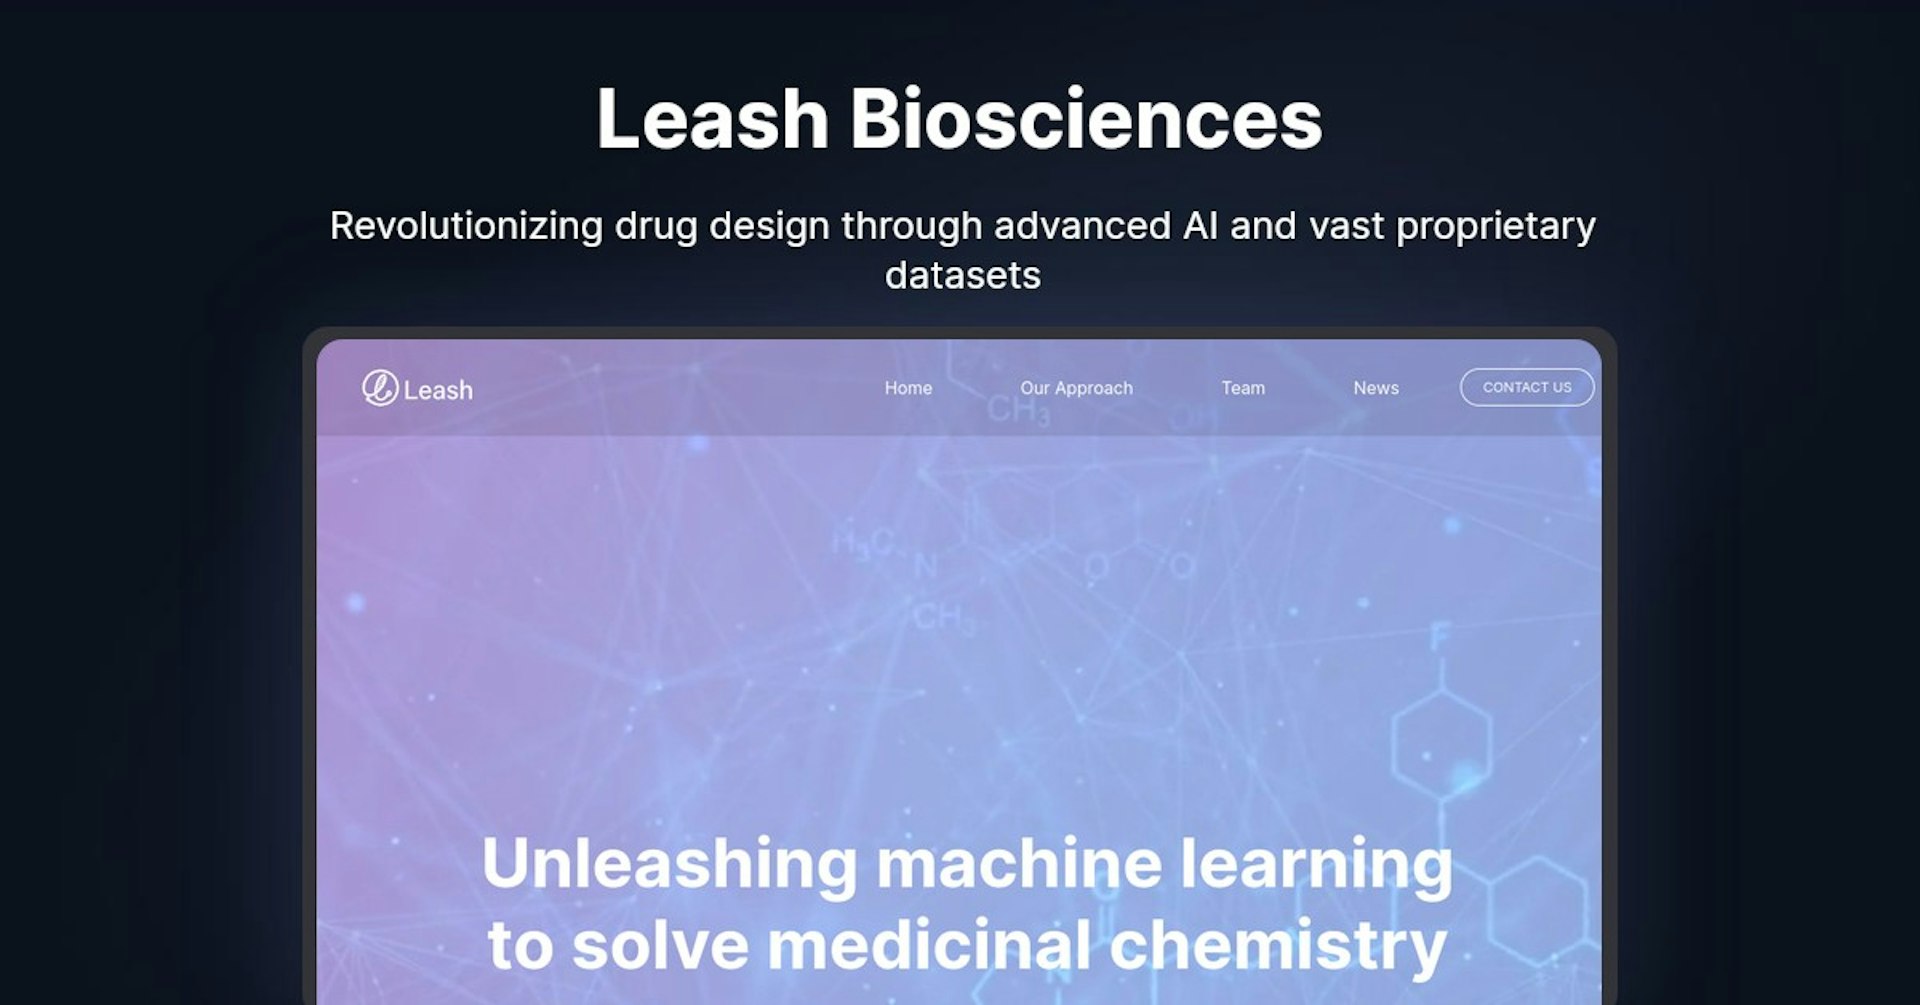 Leash Biosciences